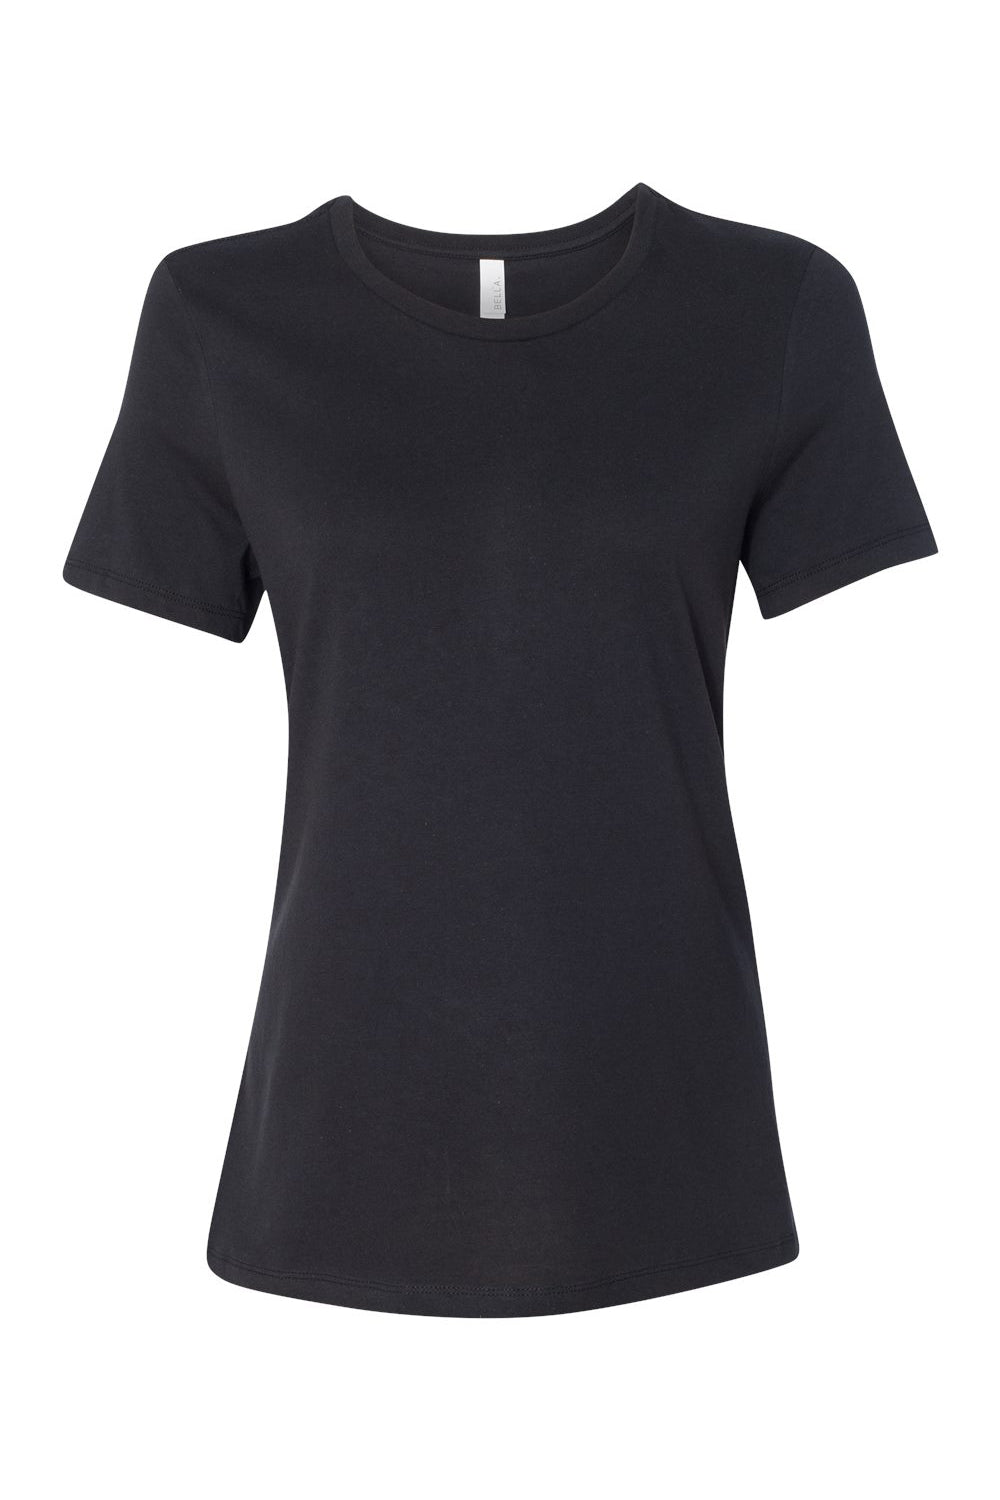 Bella + Canvas BC6400/B6400/6400 Womens Relaxed Jersey Short Sleeve Crewneck T-Shirt Vintage Black Flat Front